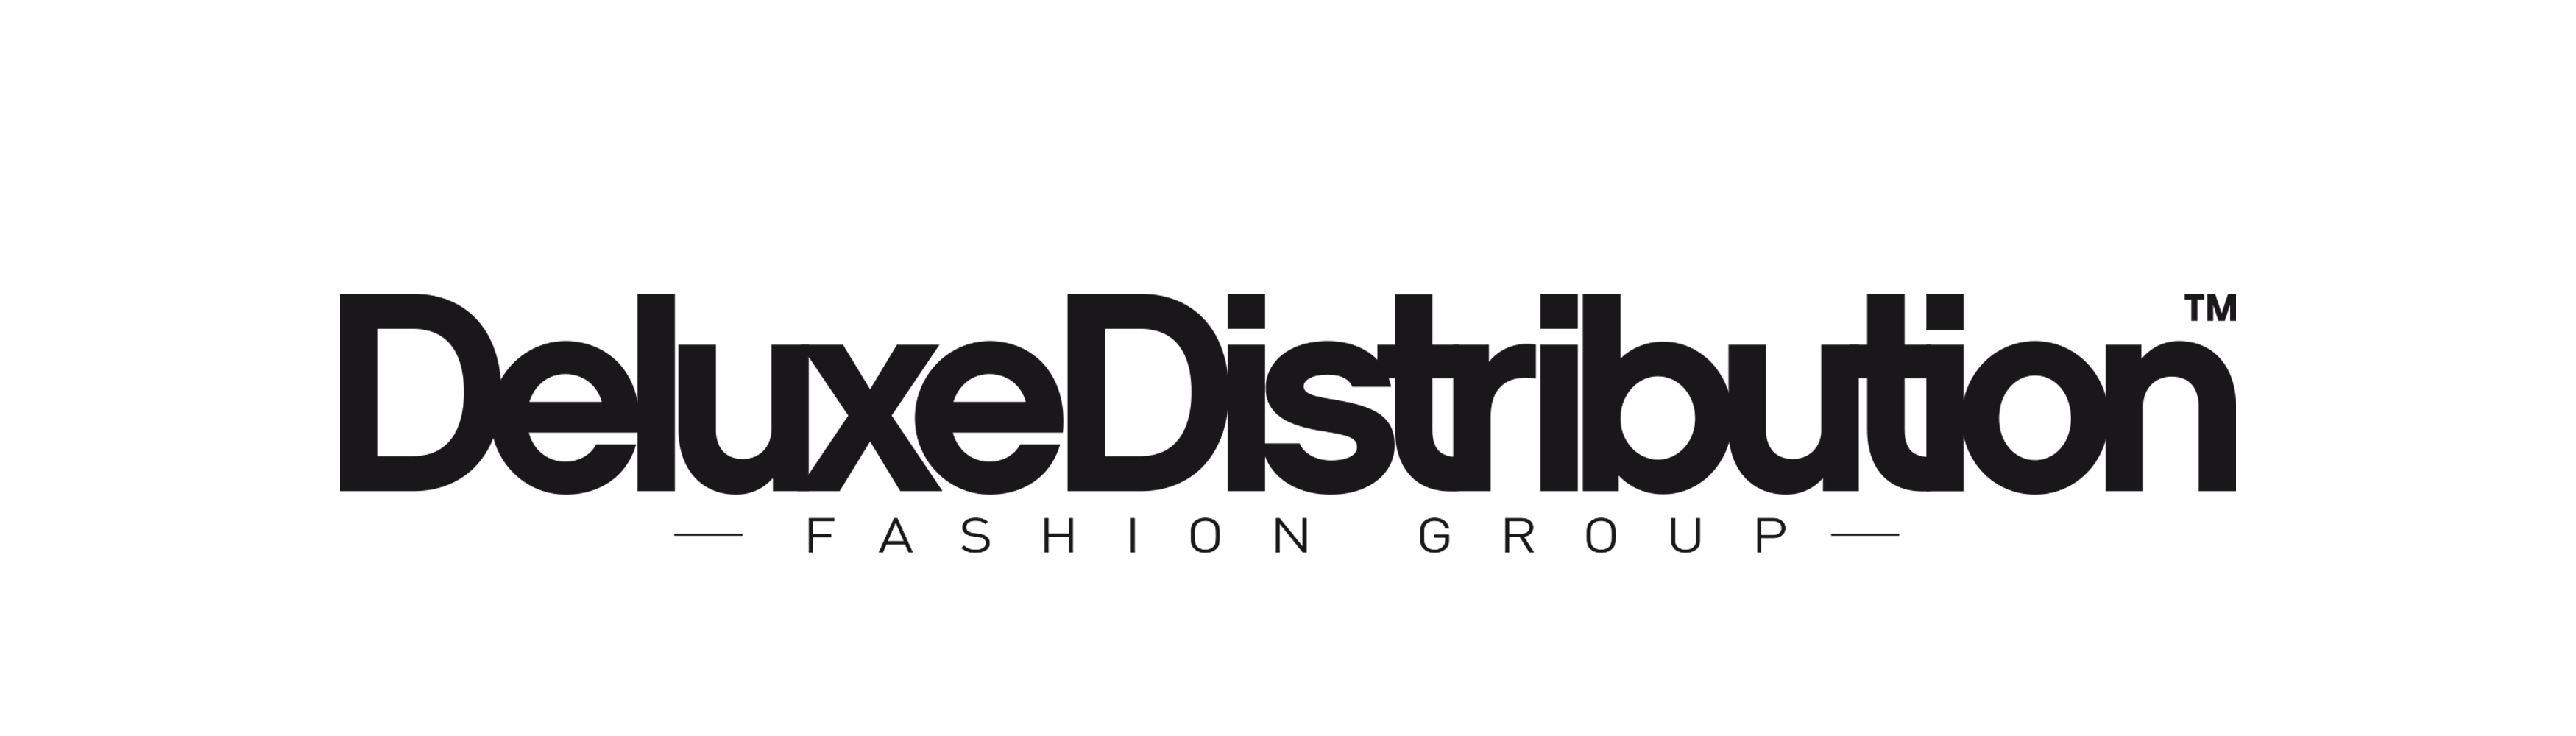 Deluxe Distribution | Premium Fashion Distributor & Showrooms Germany